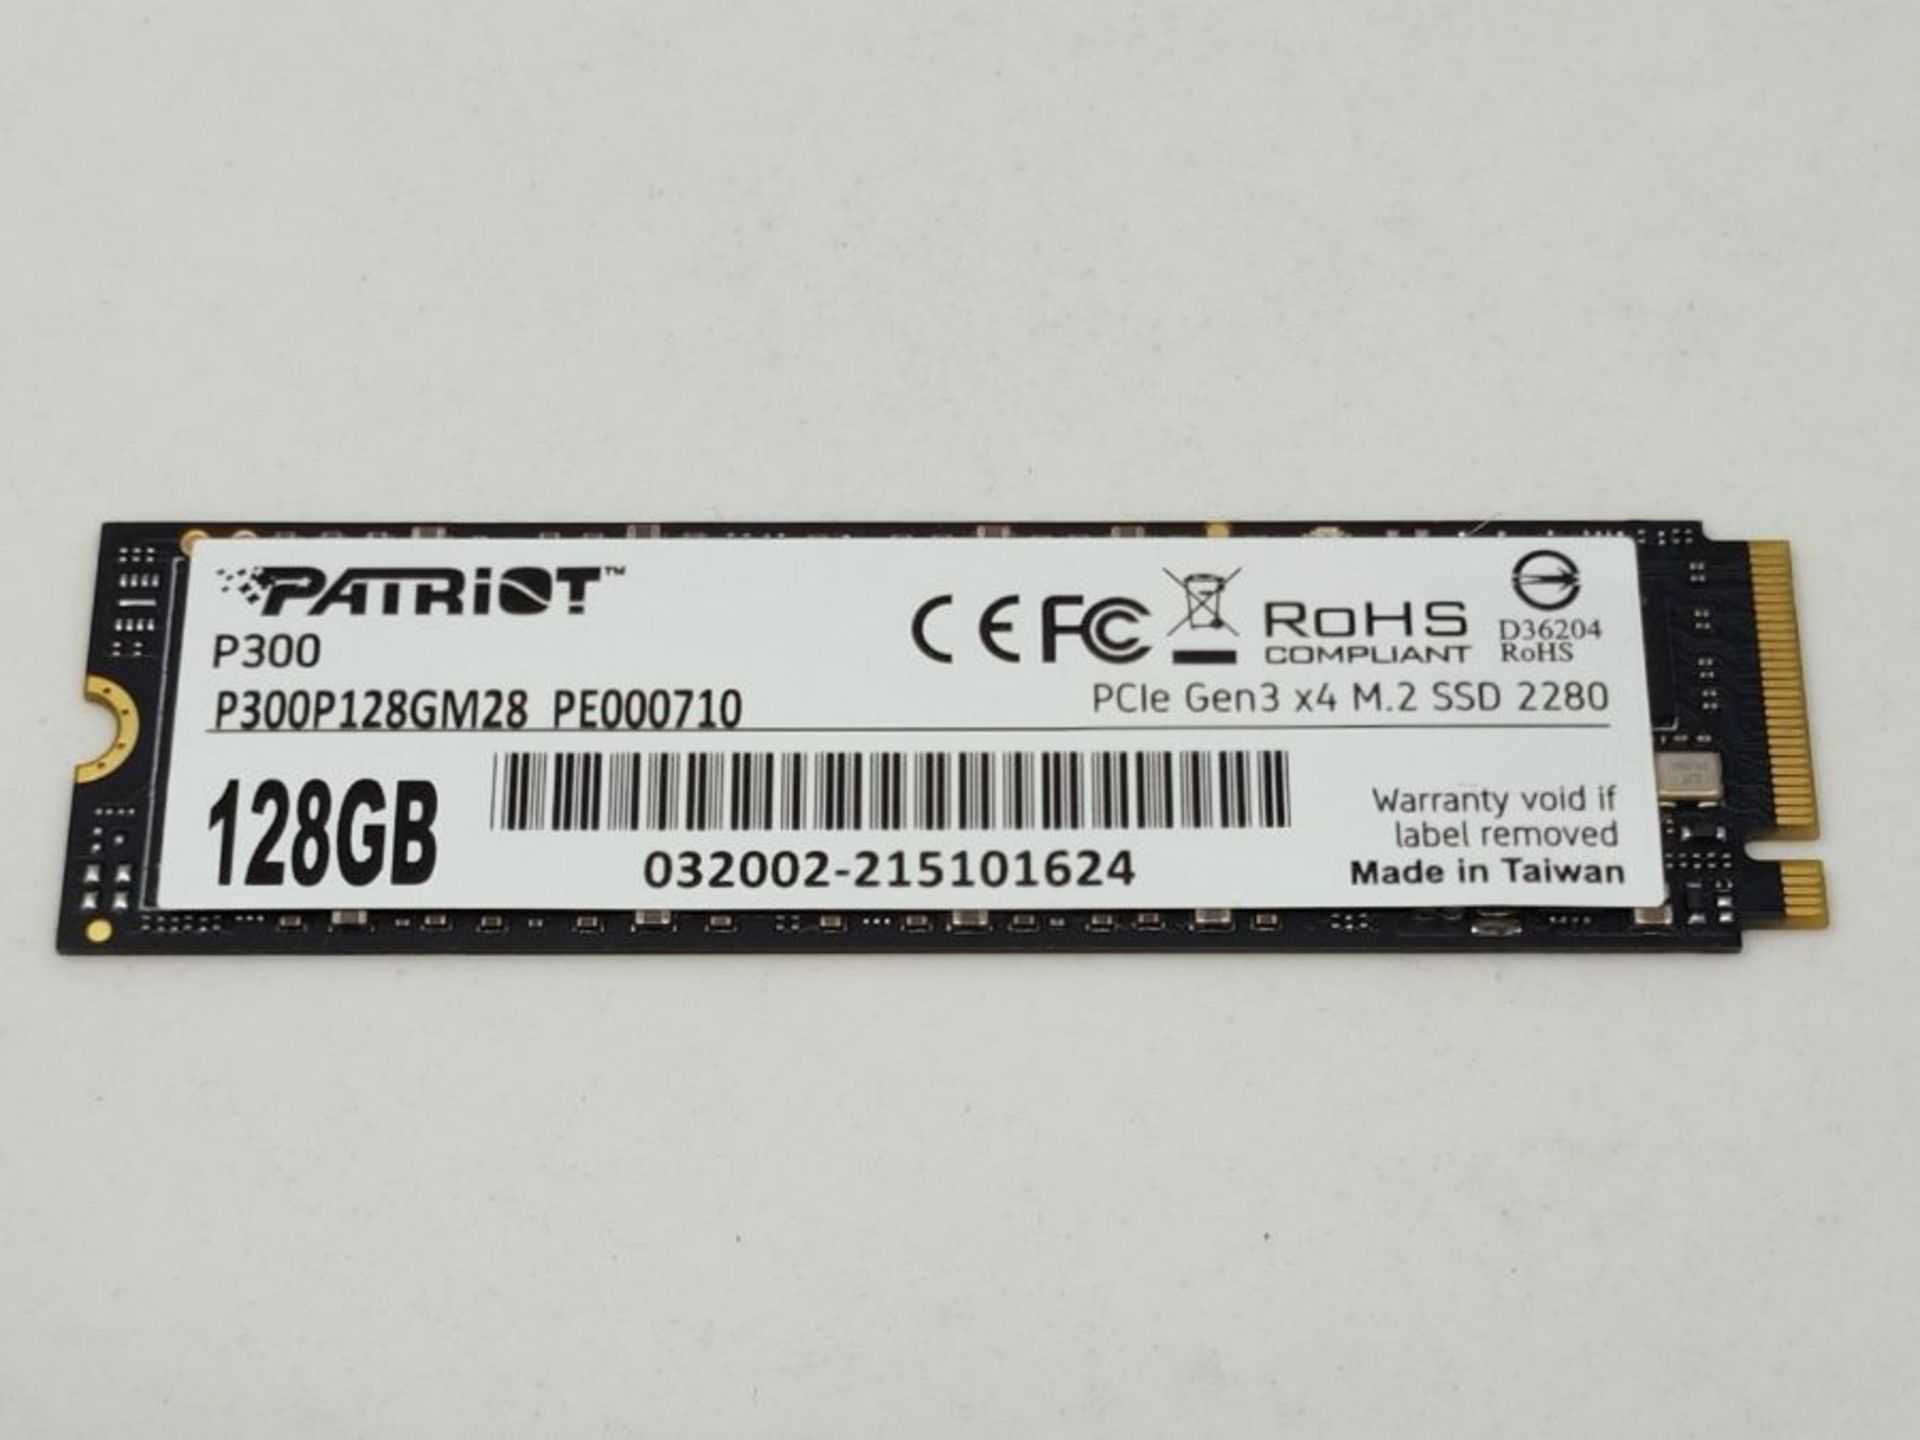 Patriot P300 M.2 2280 PCIe gen 3x4 NVMe SSD 128GB UnitÃ¡ a Stato Solido interno SSD - Image 3 of 3